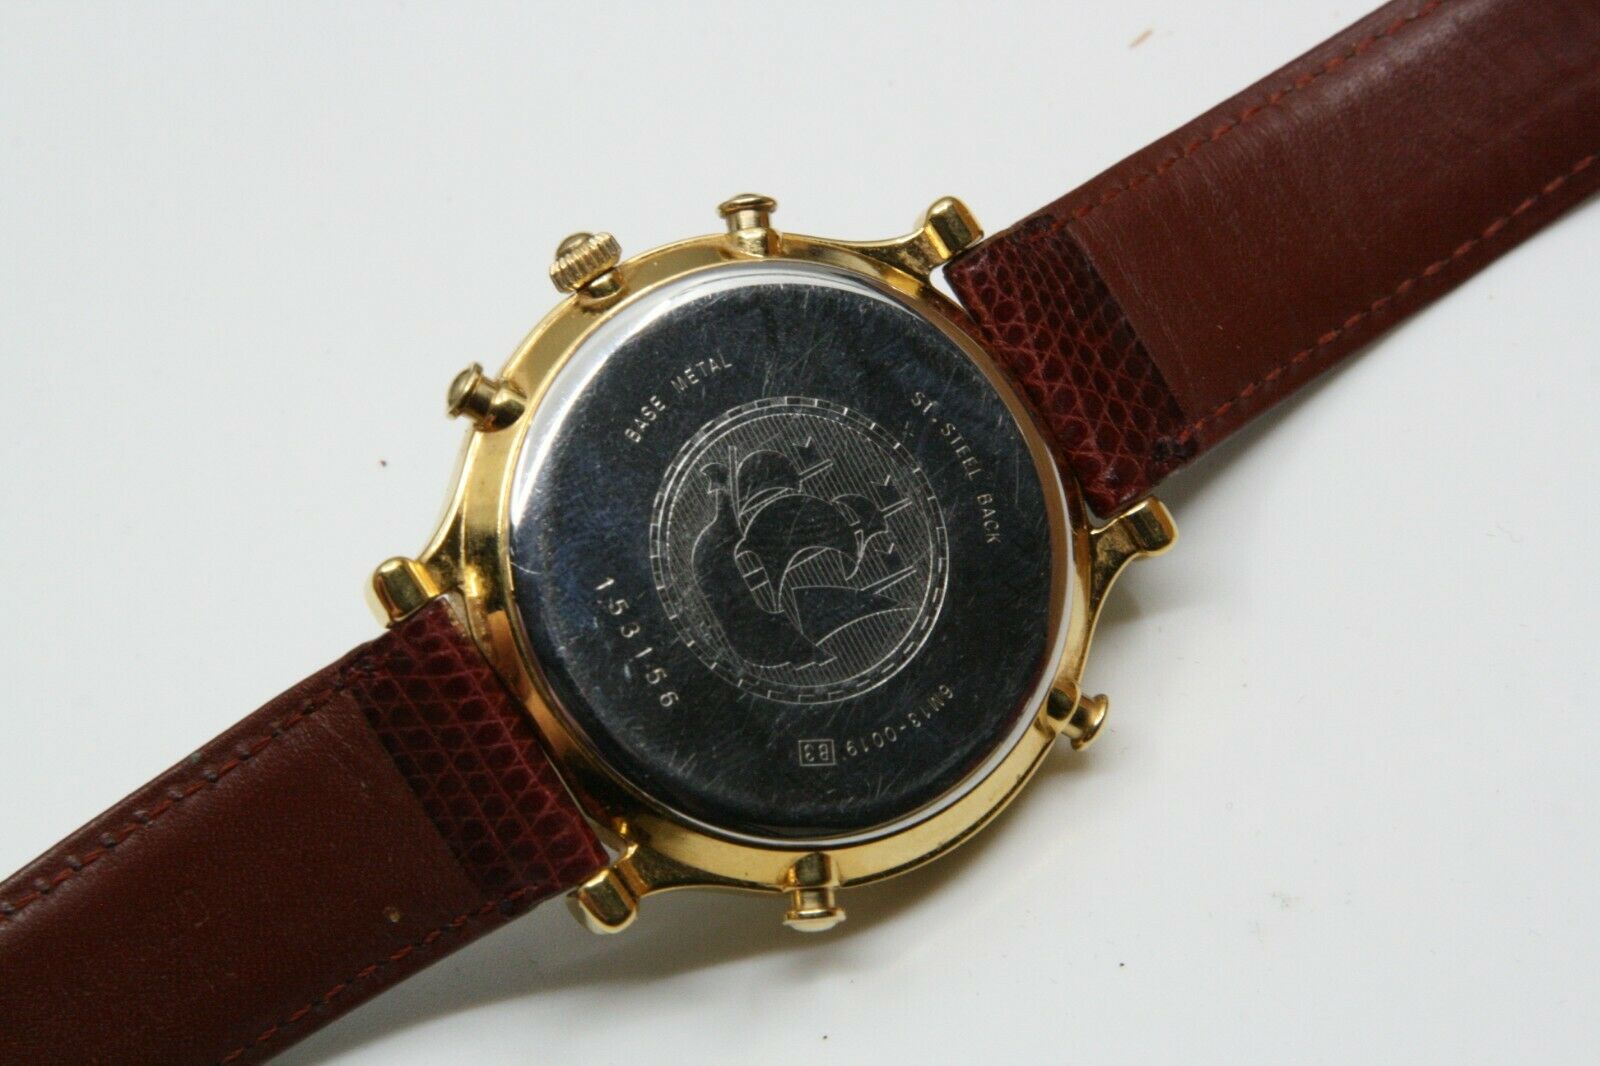 Seiko 6M13-0019 Age of Discovery Perpetual Calendar quartz watch |  WatchCharts